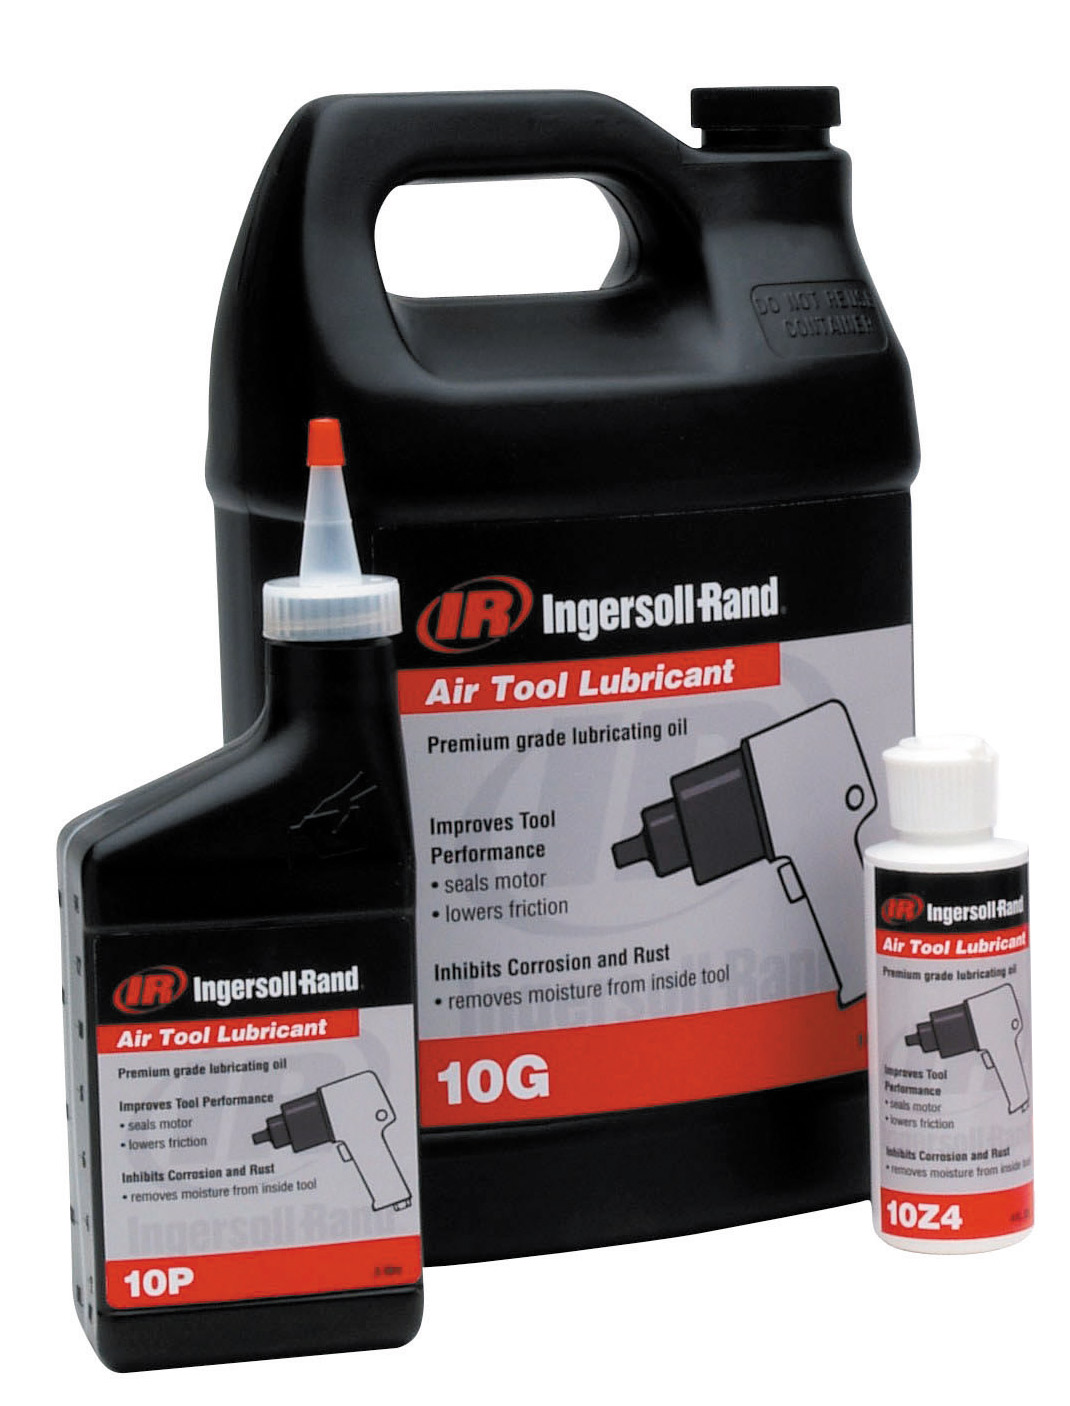 Ingersoll Rand air tool lubricants